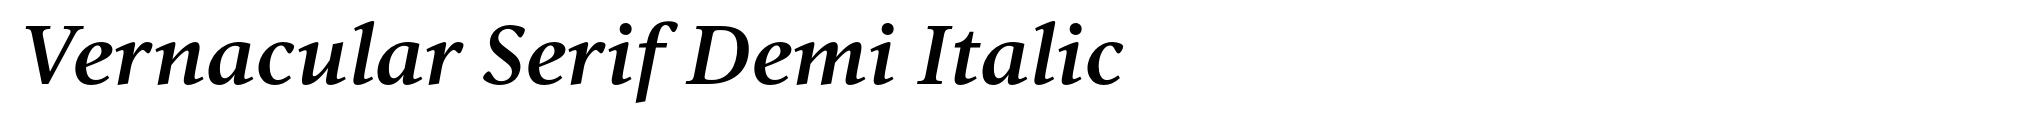 Vernacular Serif Demi Italic image